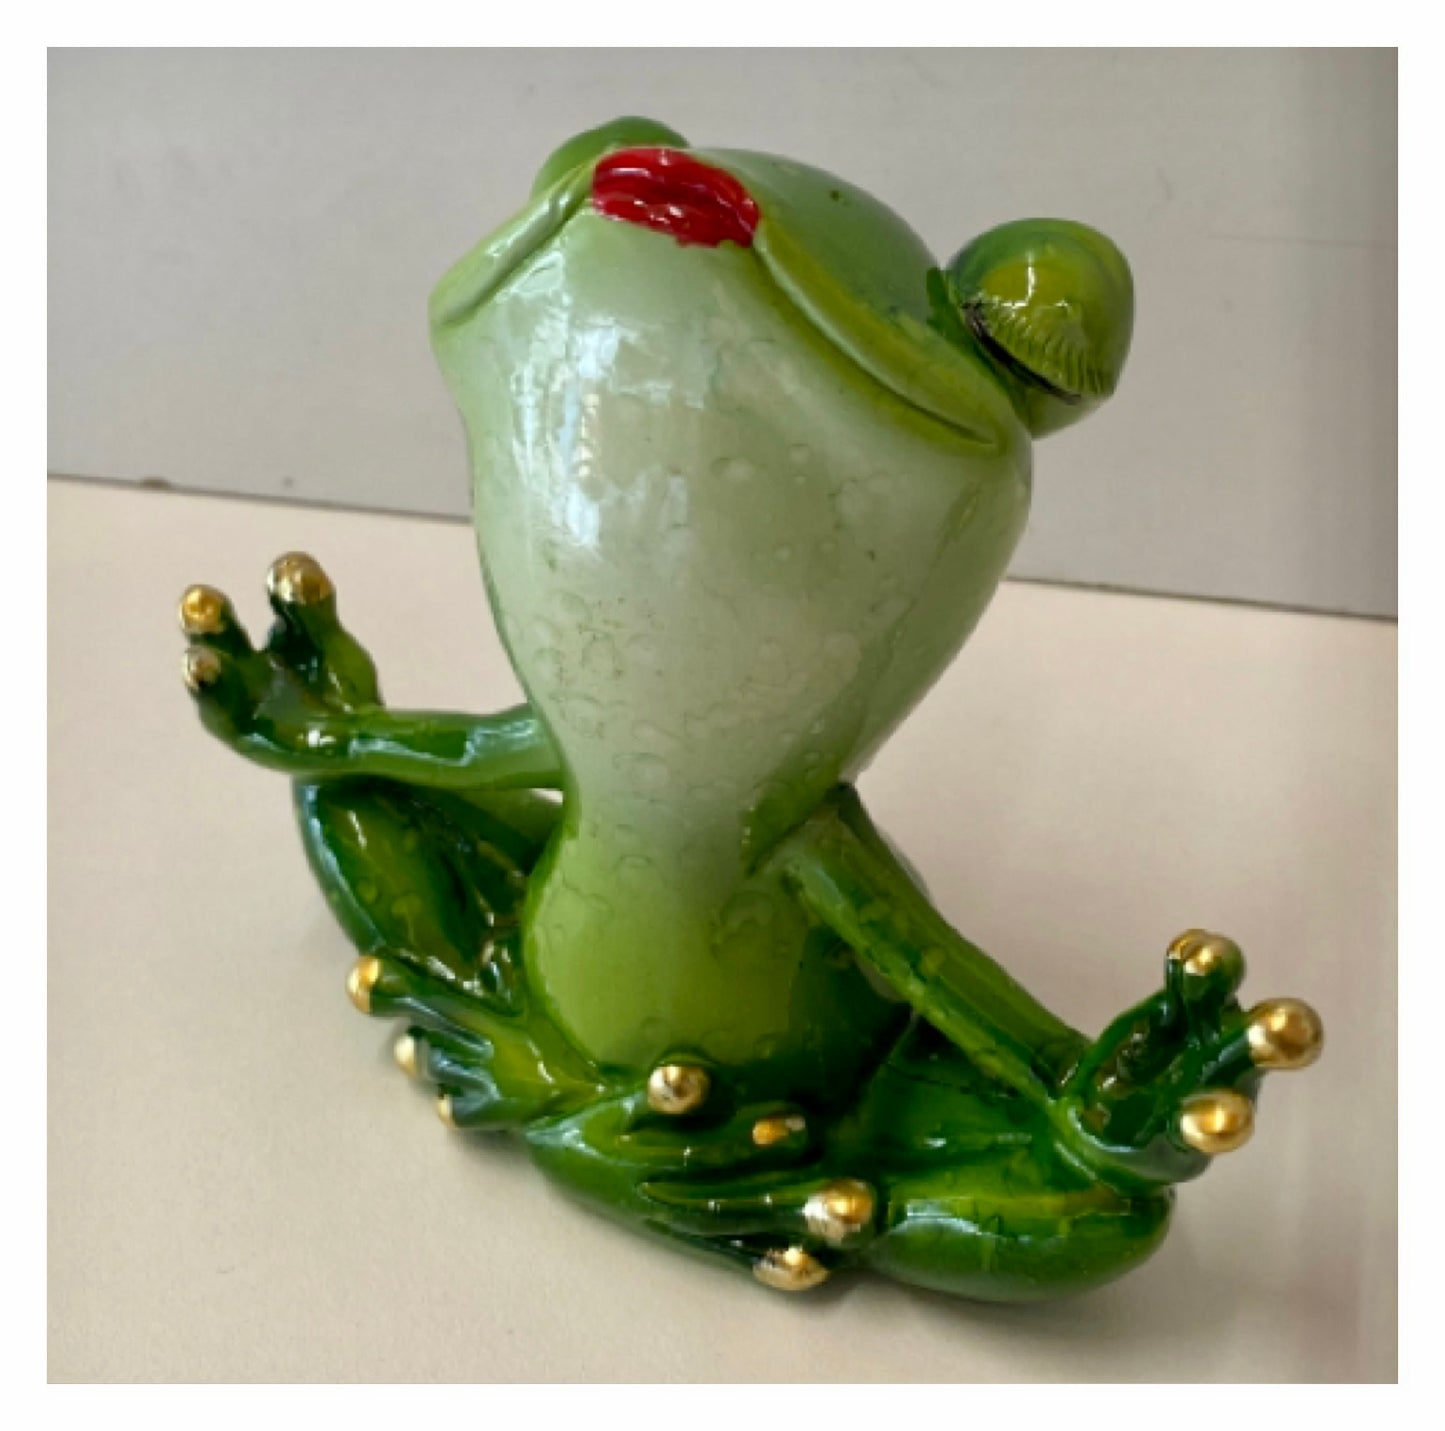 Frog Meditate Zen Yoga Ornament